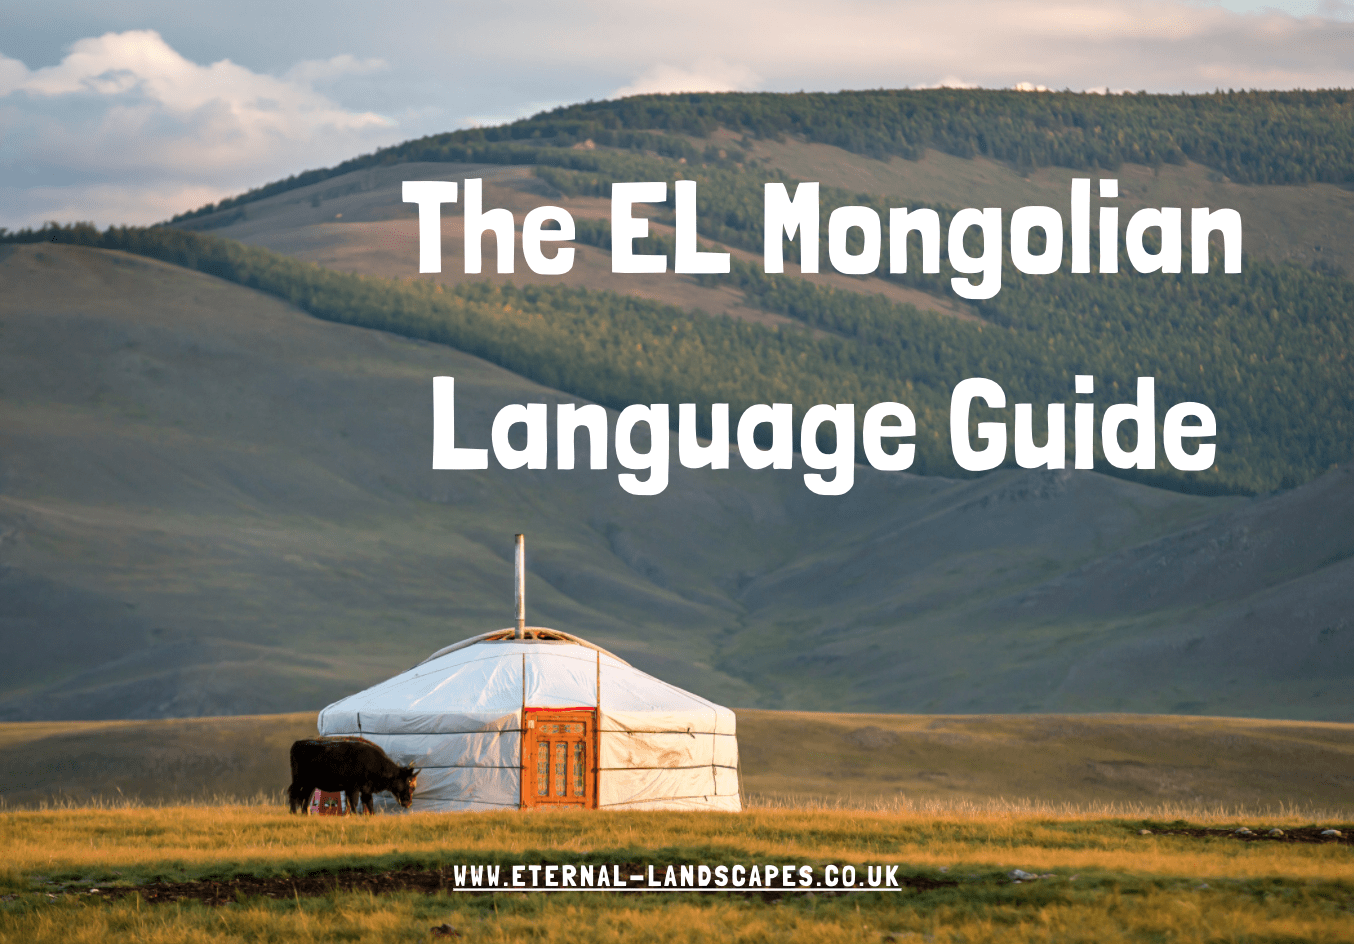 The EL Mongolian Language Guide